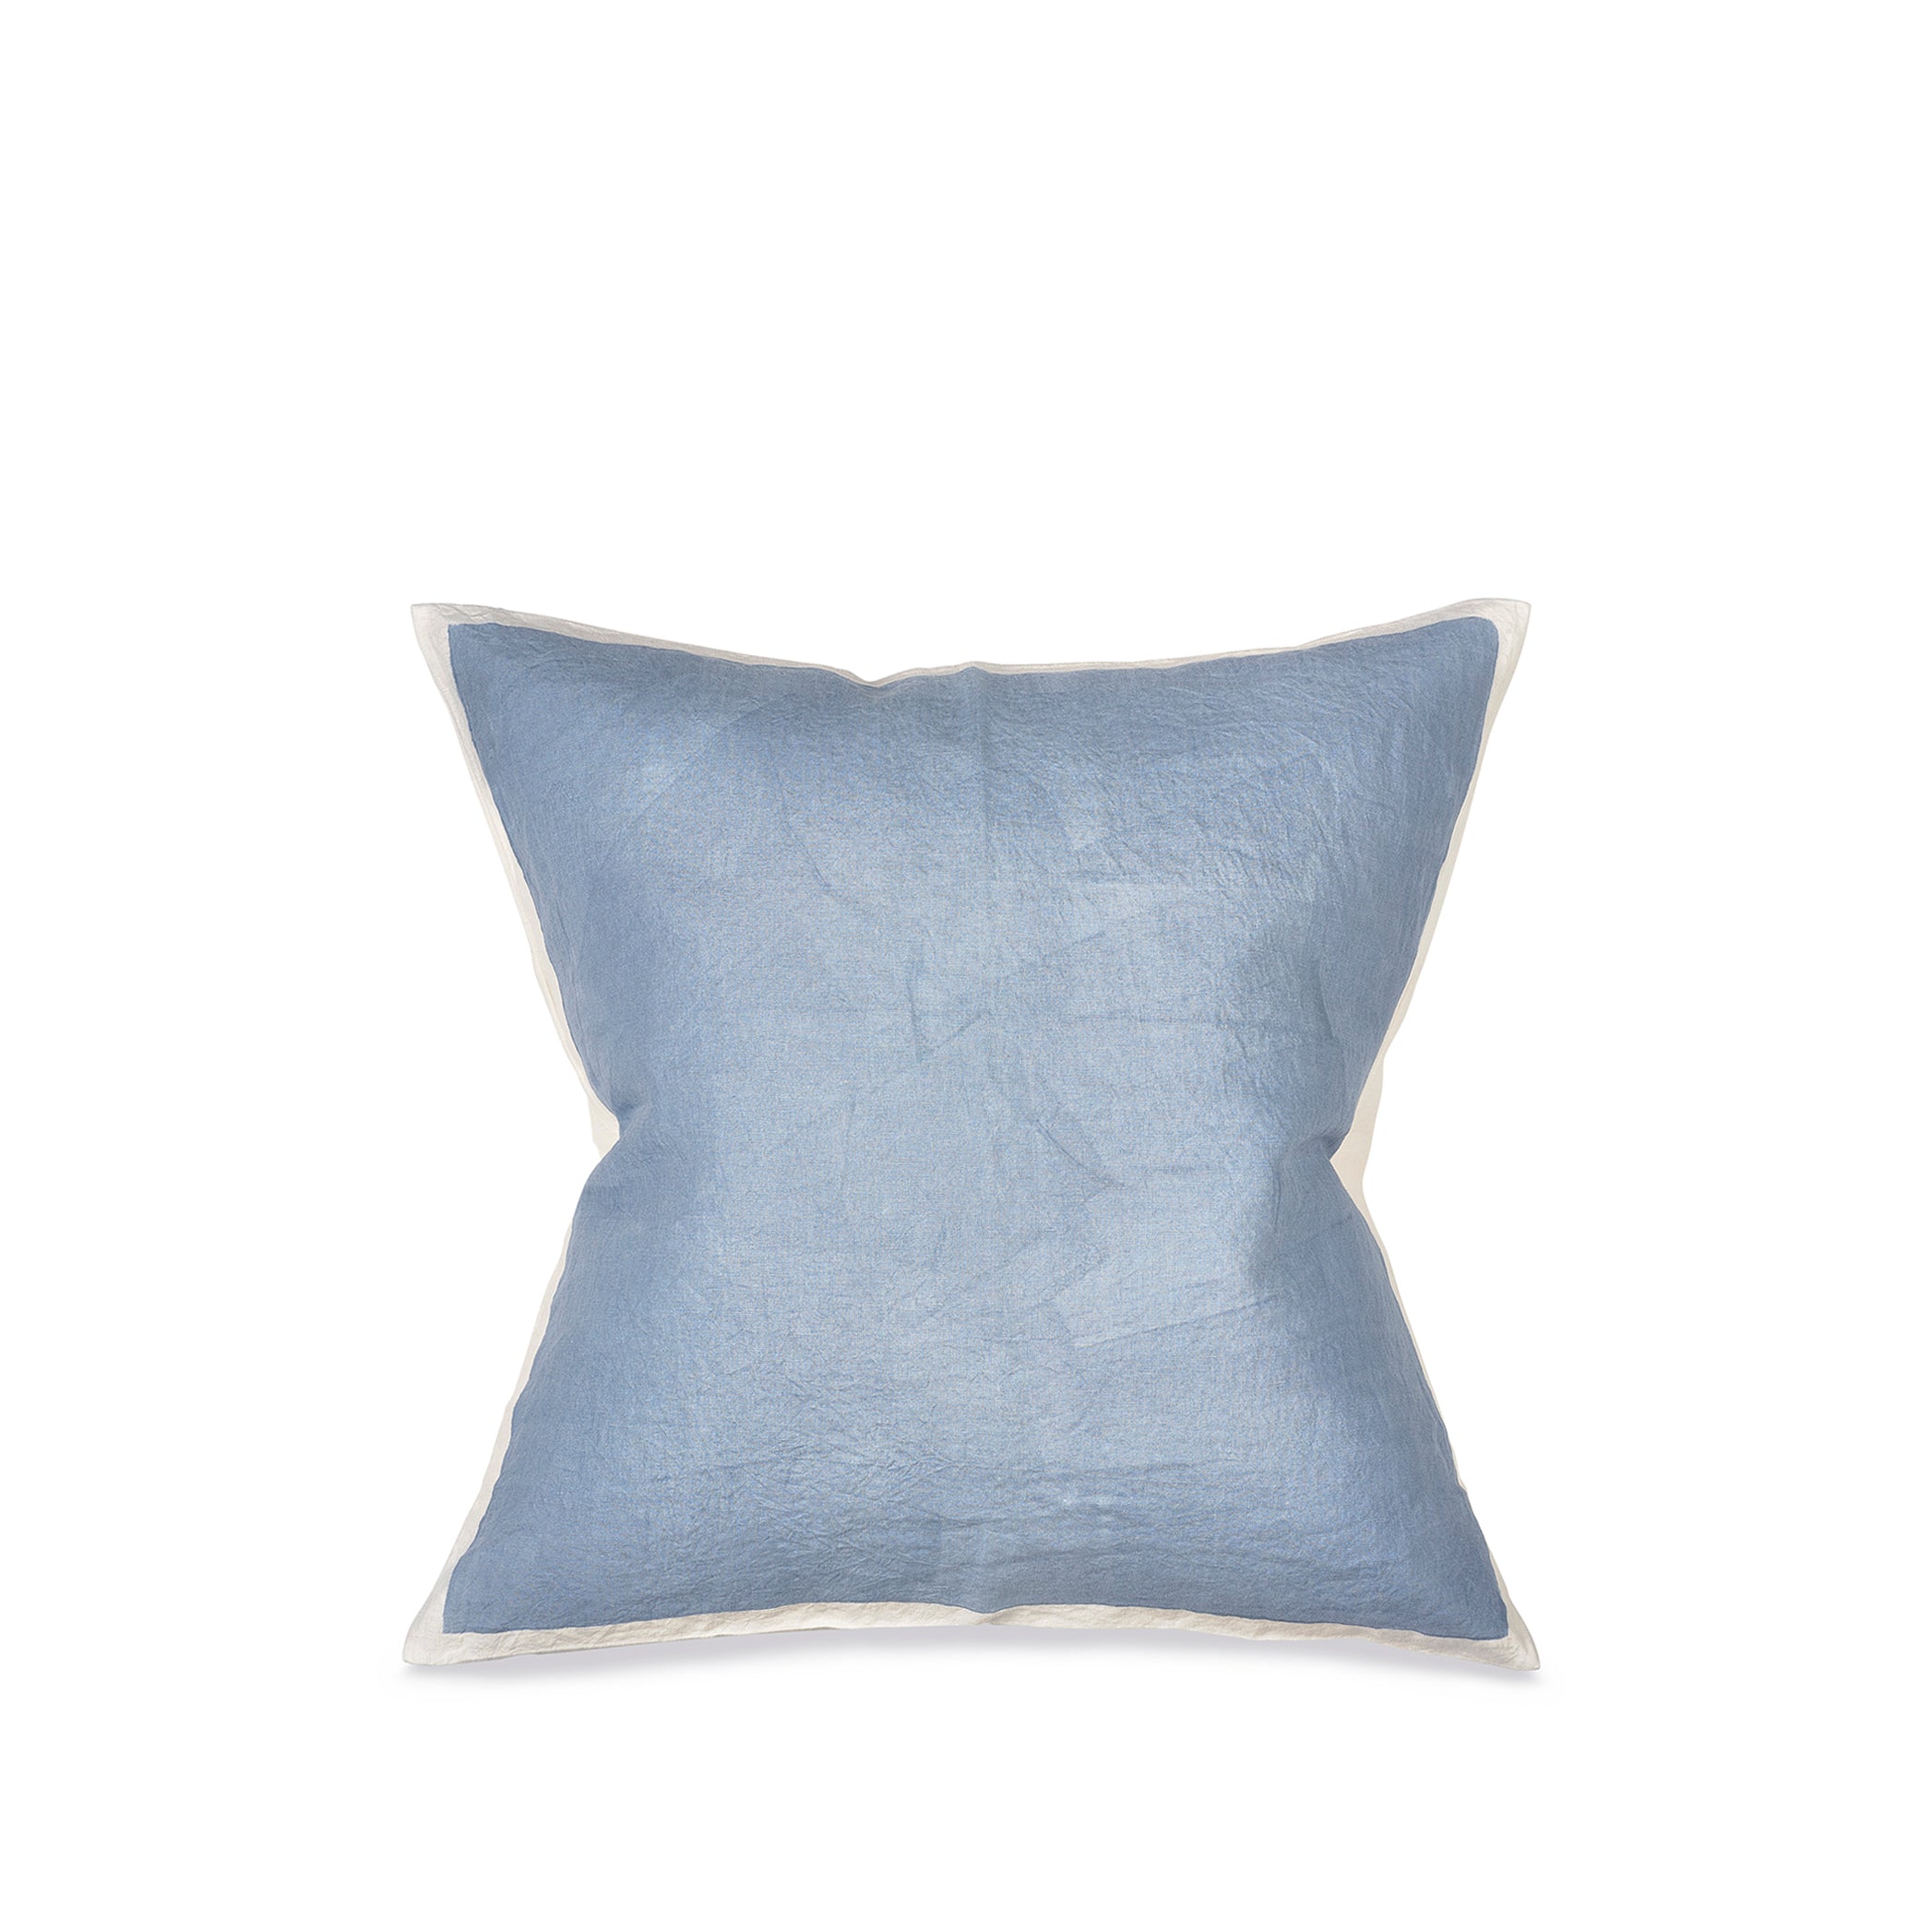 Hand Painted Linen Cushion in Pale Blue, 60cm x 60cm